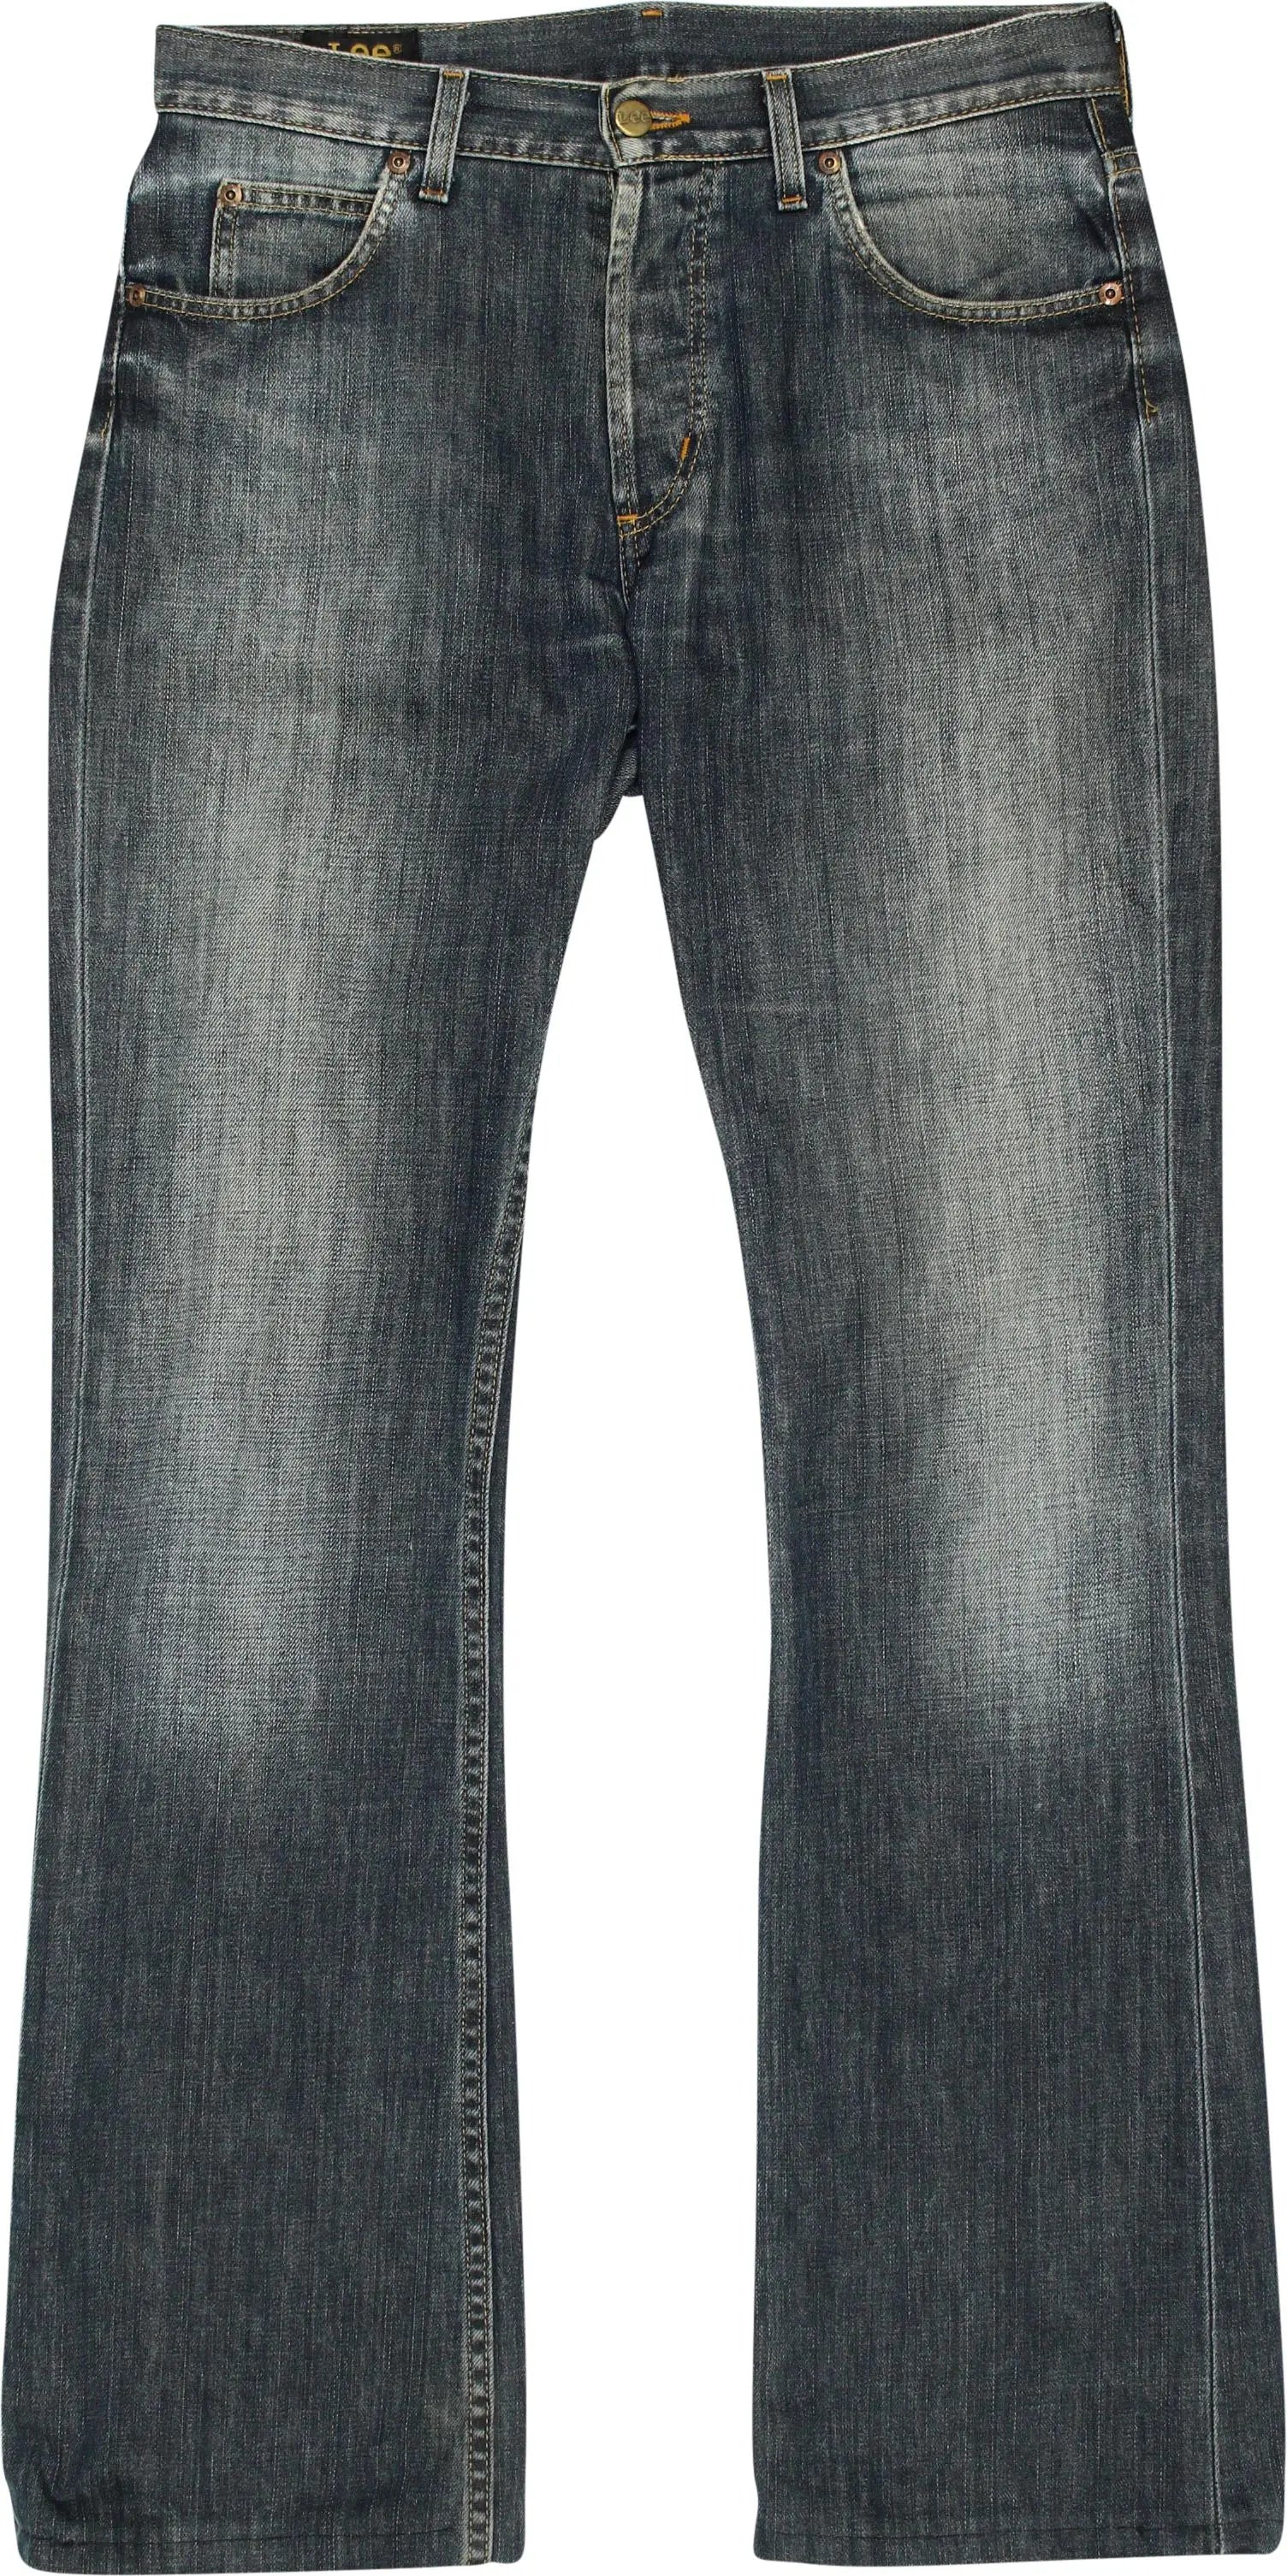 Lee - Denver Jeans by Lee- ThriftTale.com - Vintage and second handclothing